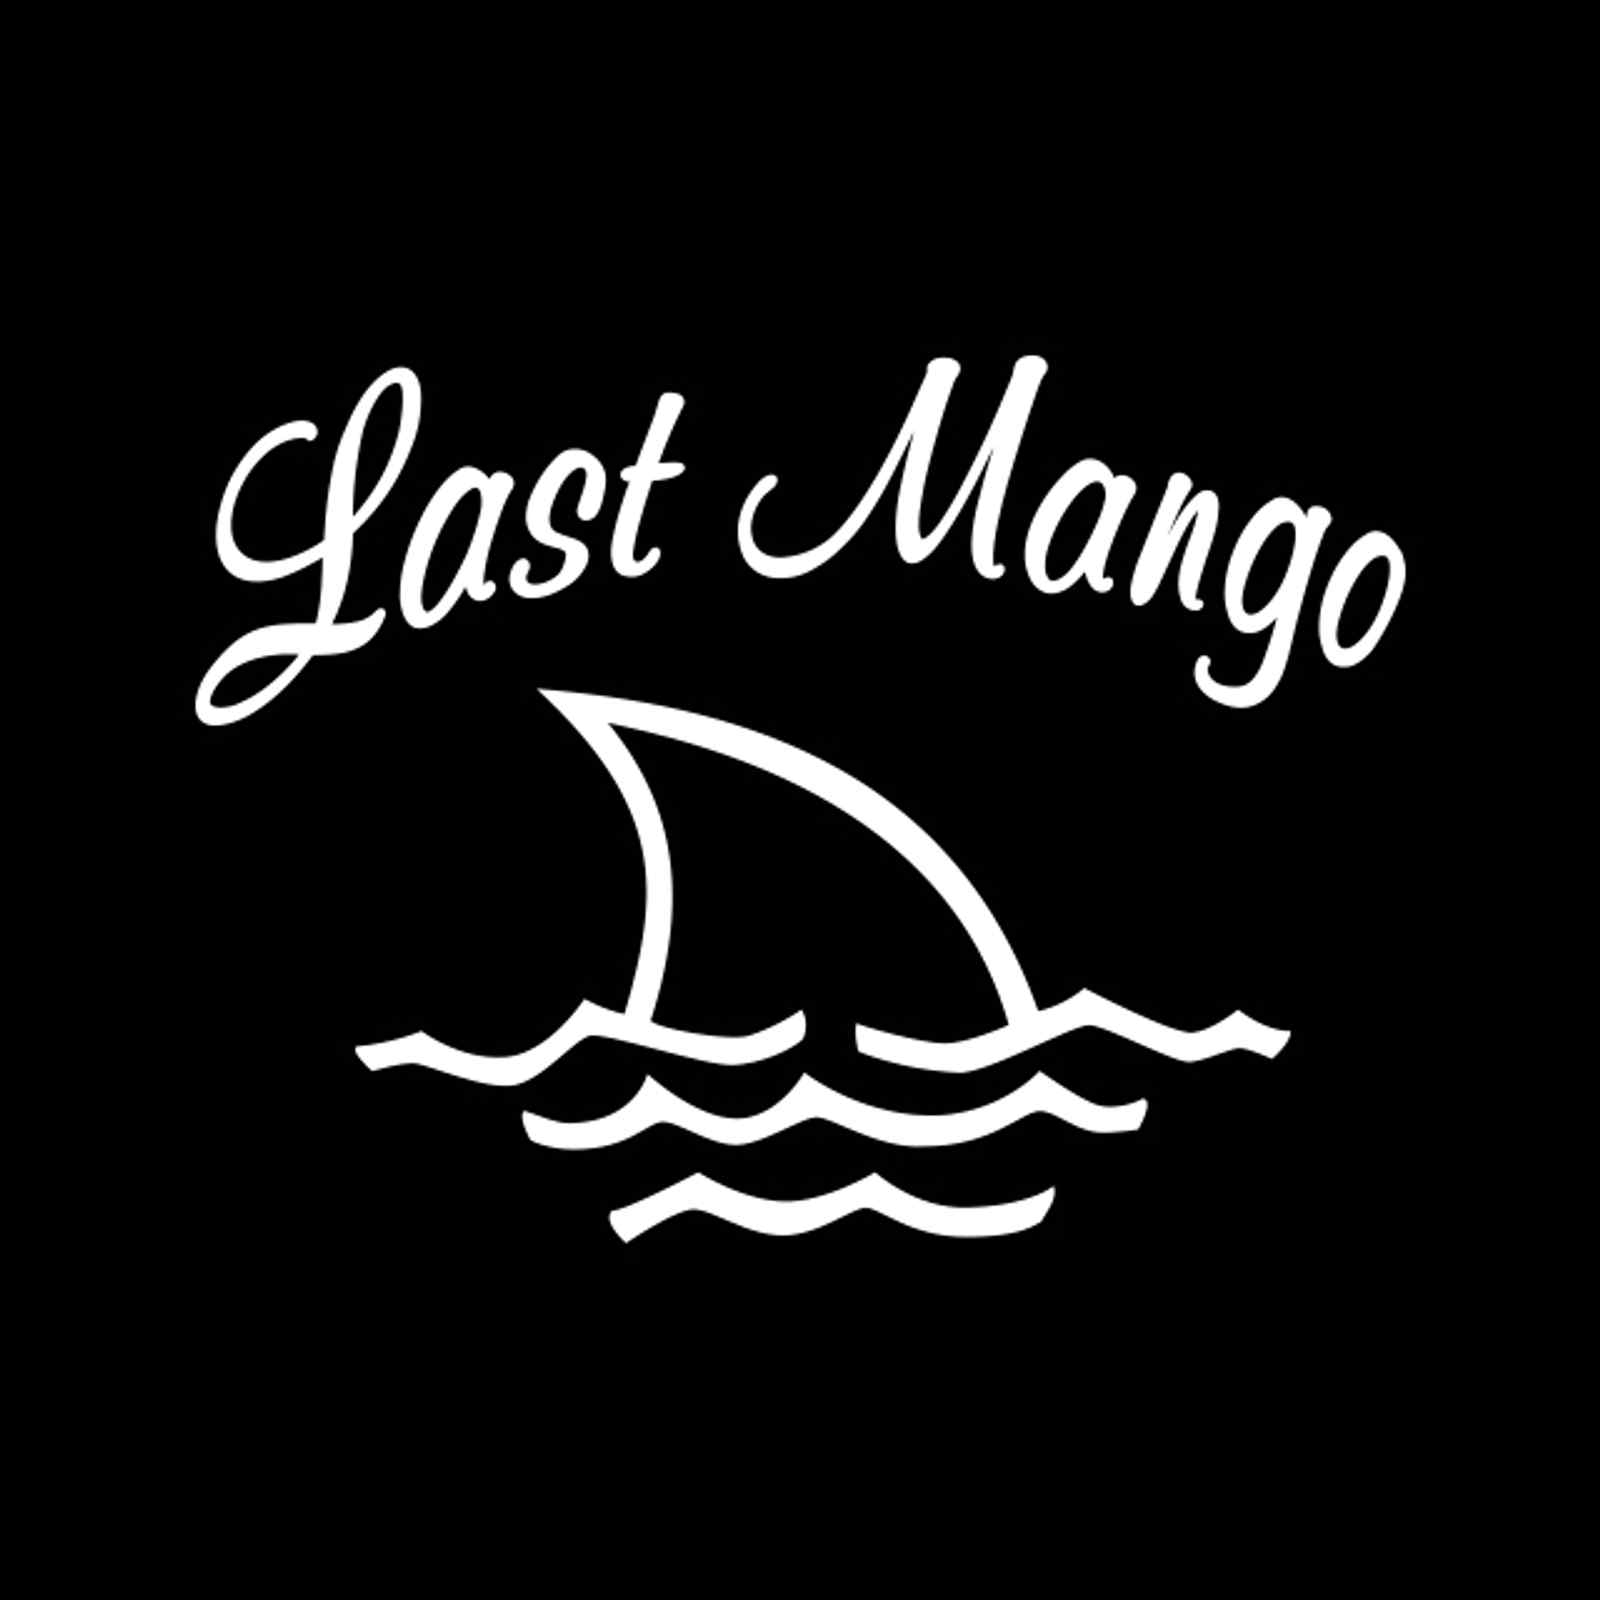 LAST MANGO BOATWORKS